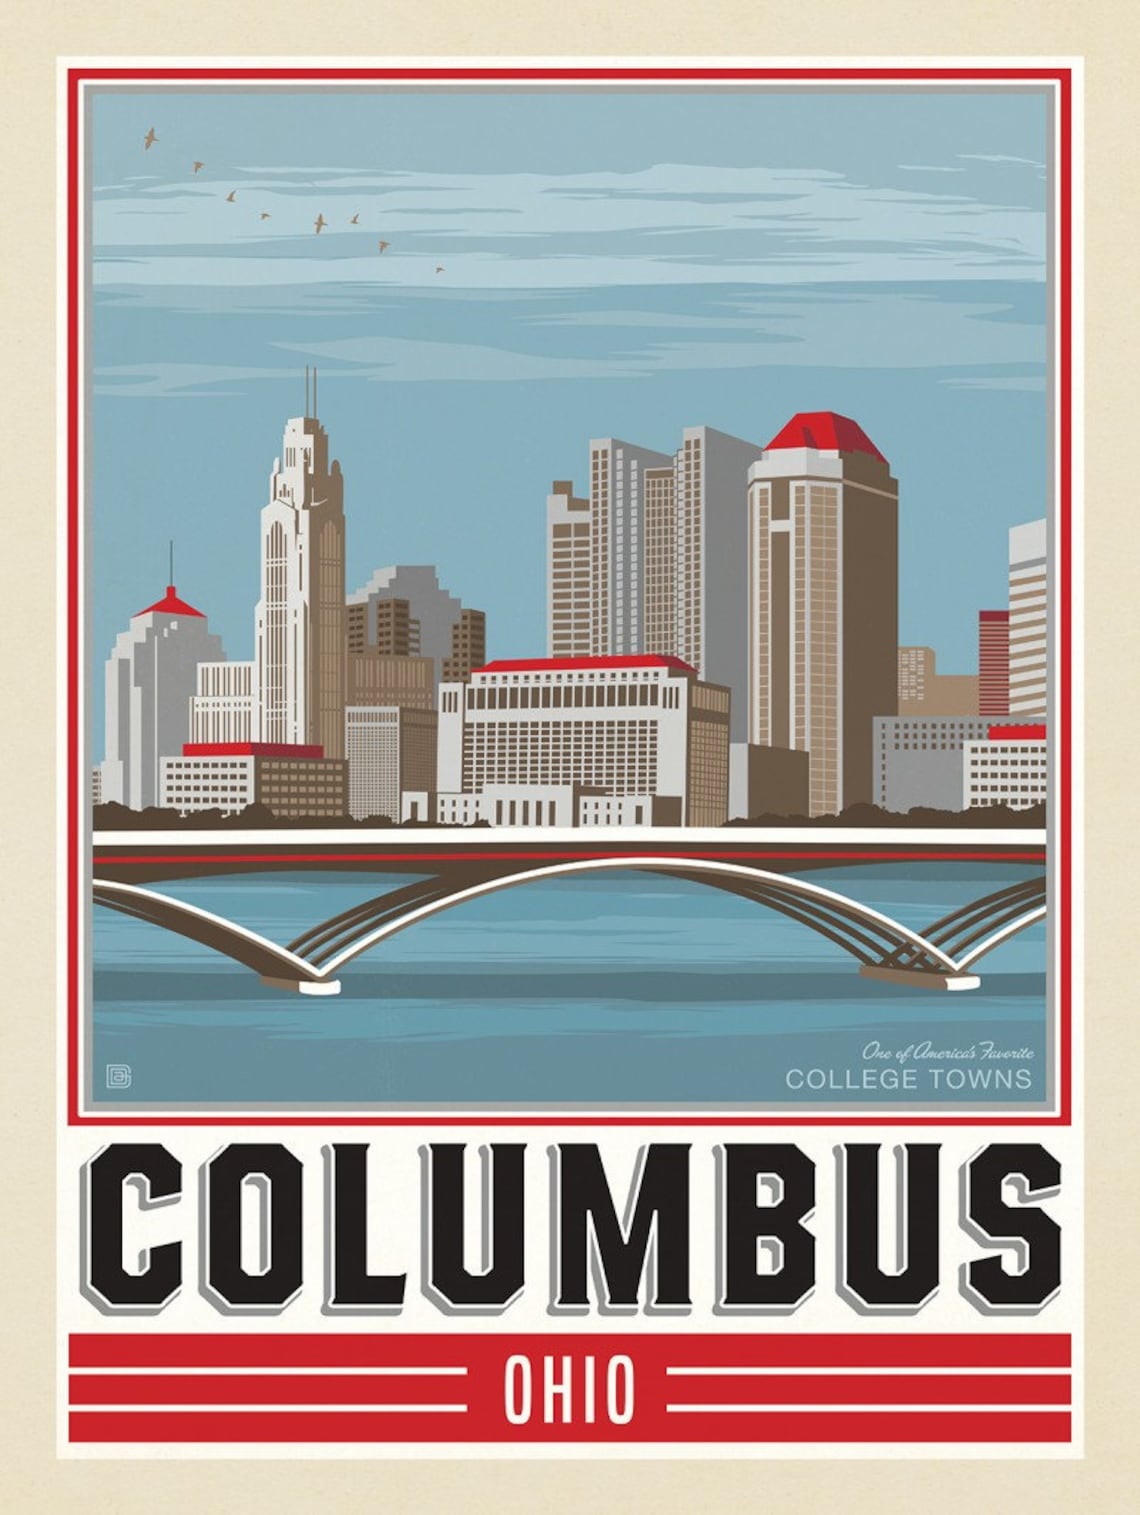 columbus ohio tourism slogan